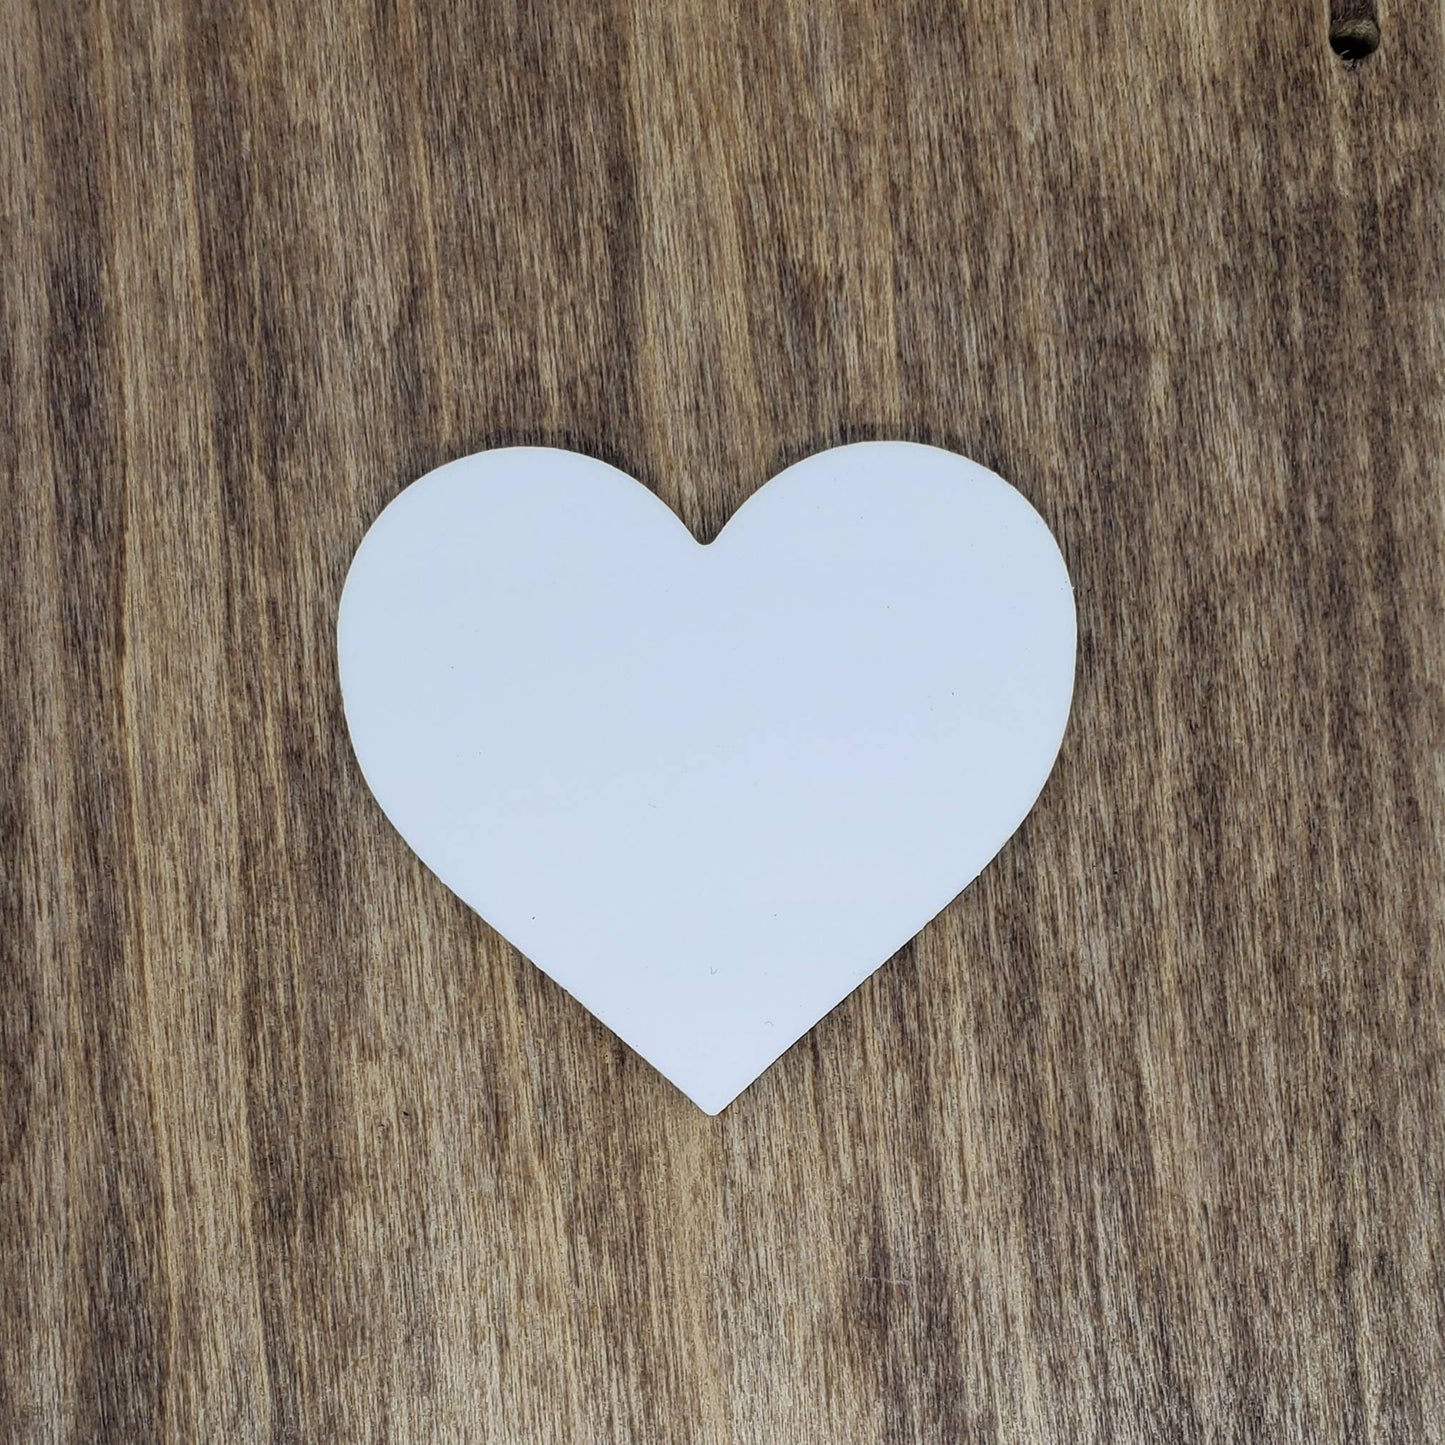 Set of 5 or 10 Sublimation heart shaped hardboard blanks, 2.5" Heart shaped sublimation hardboard blank, Heart magnet sublimation blank